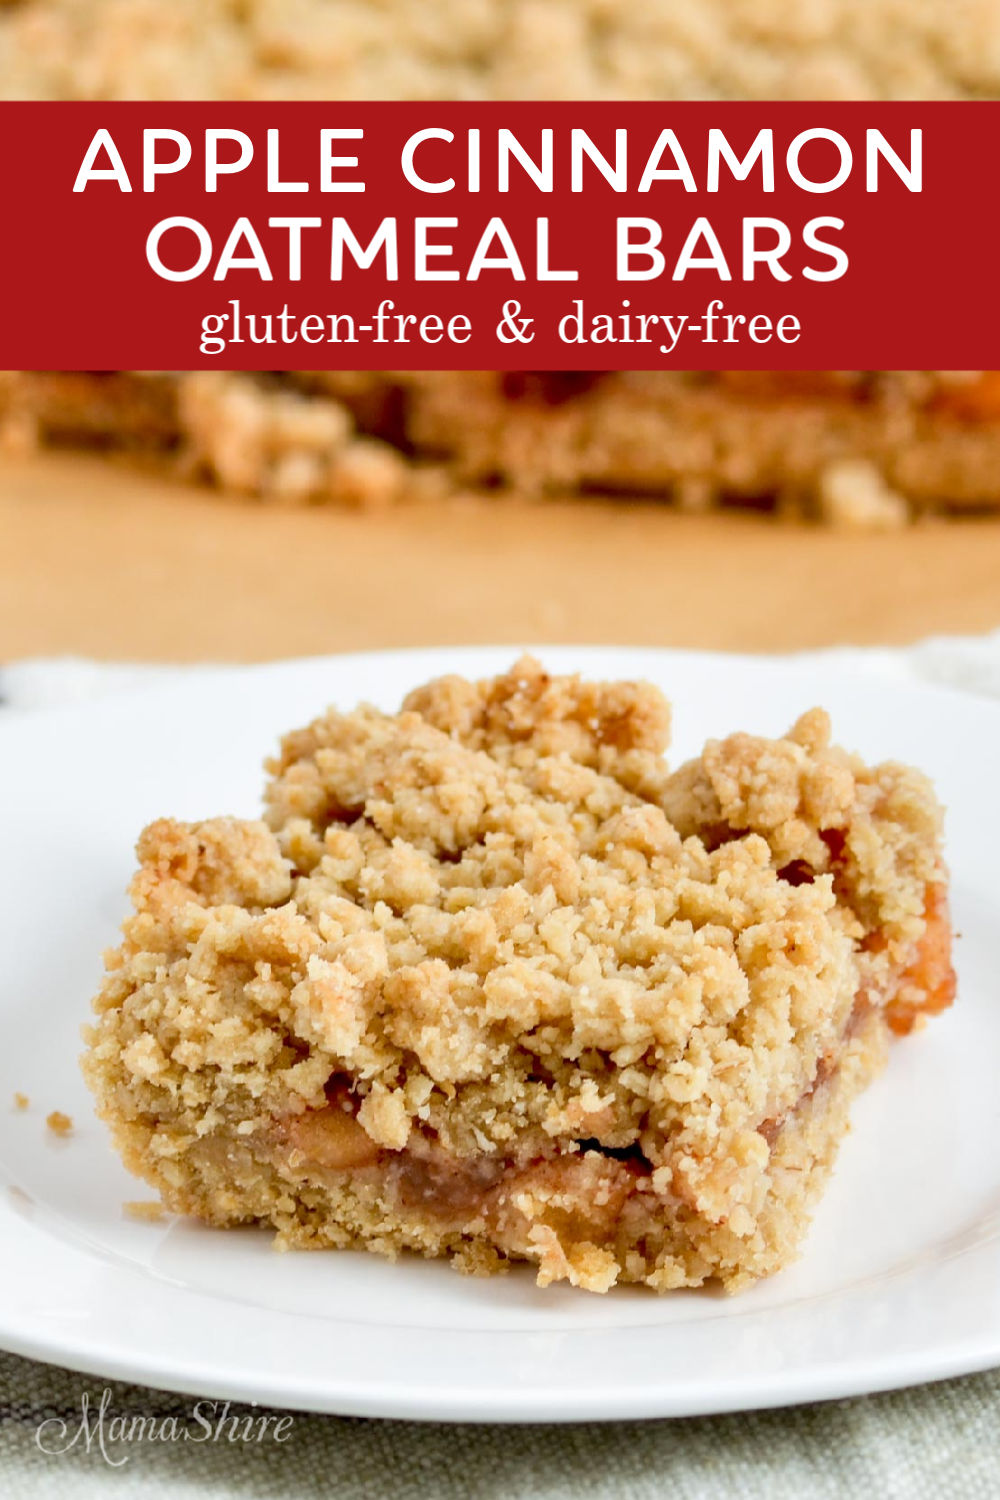 Gluten-free apple cinnamon oatmeal bars